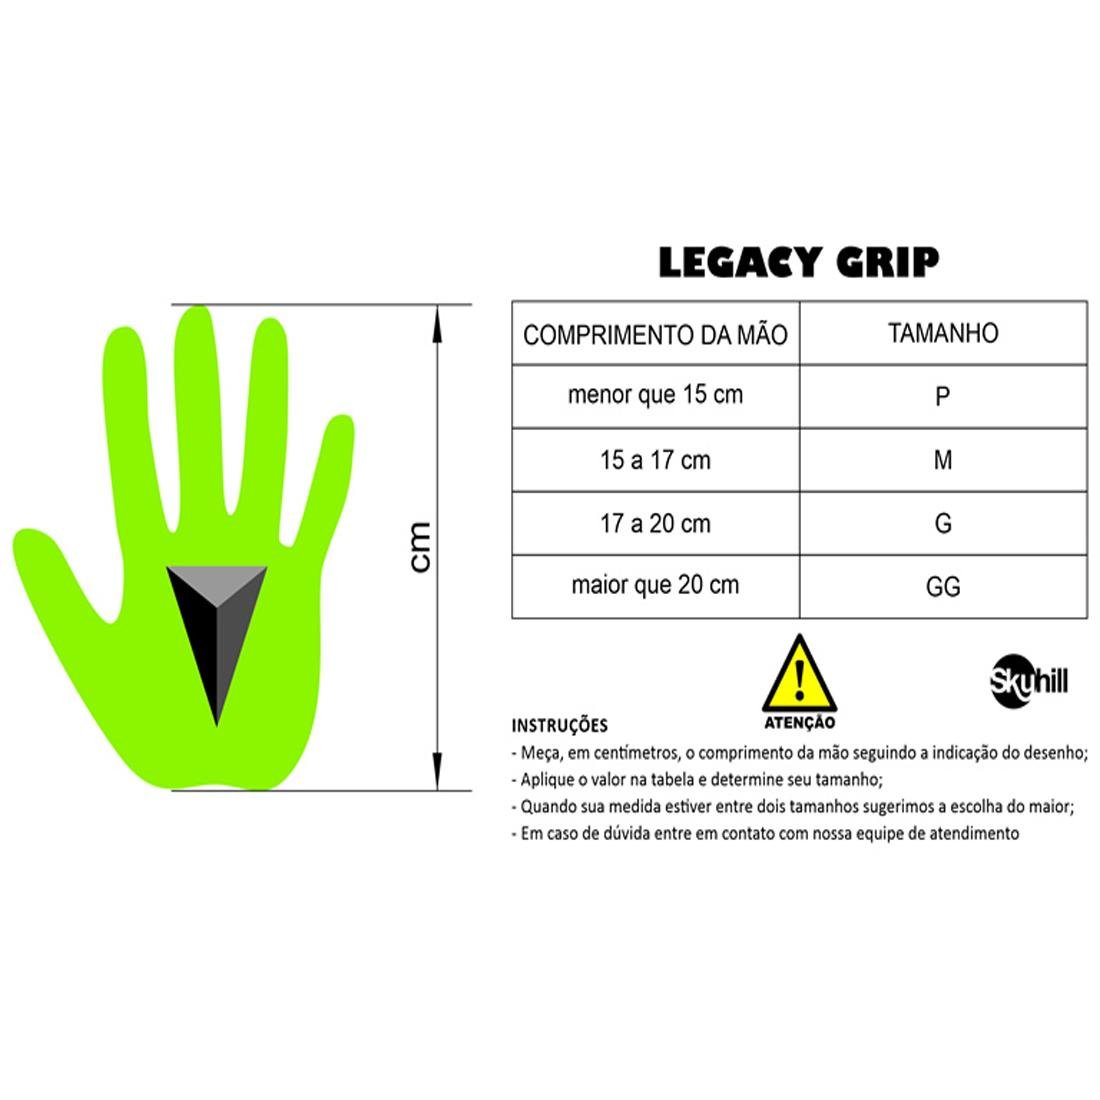 Hand Grip Legacy Power Colors Neopreme Skyhill - Laranja - G